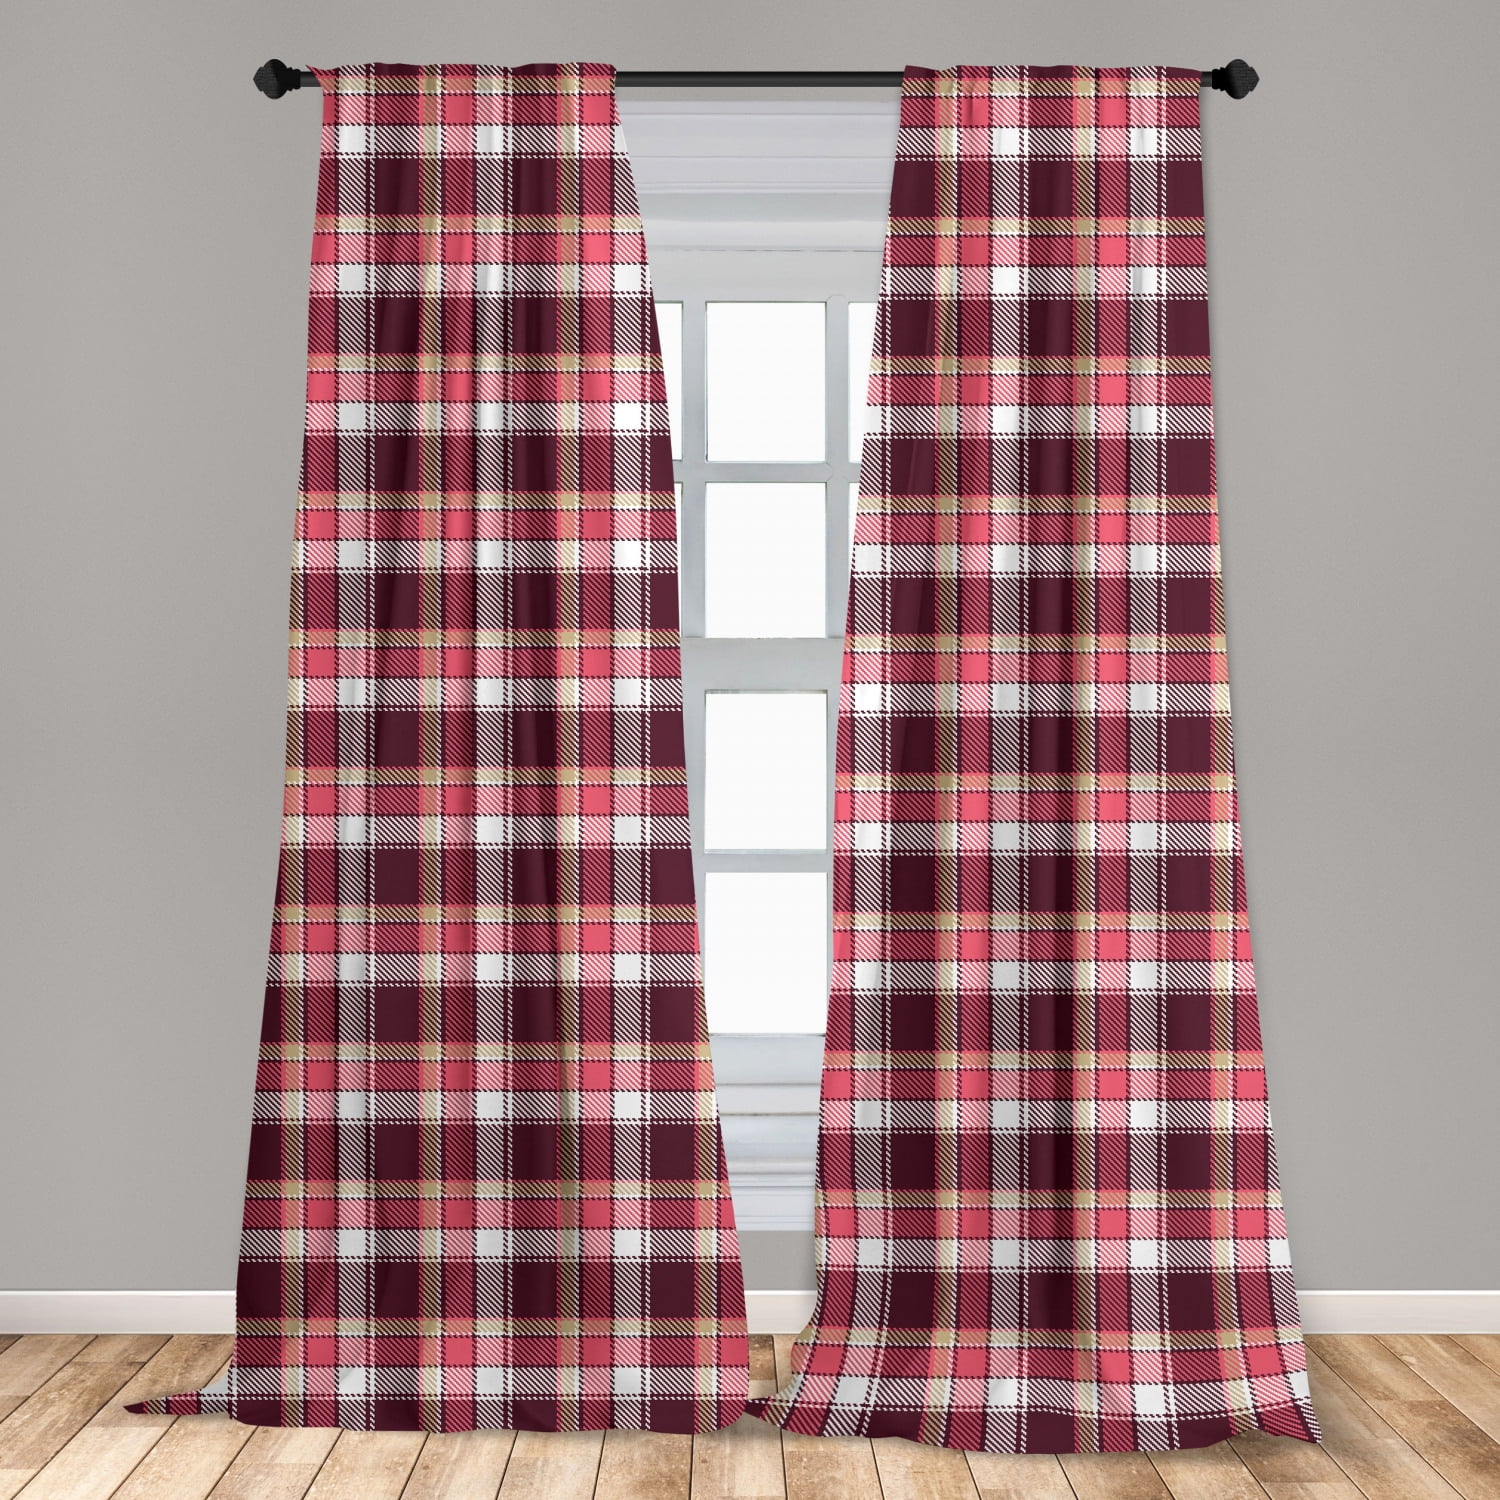 Set 2 Red Green Tartan Plaid Holiday Curtains Panels Drapes 63 84 95 inch Long 